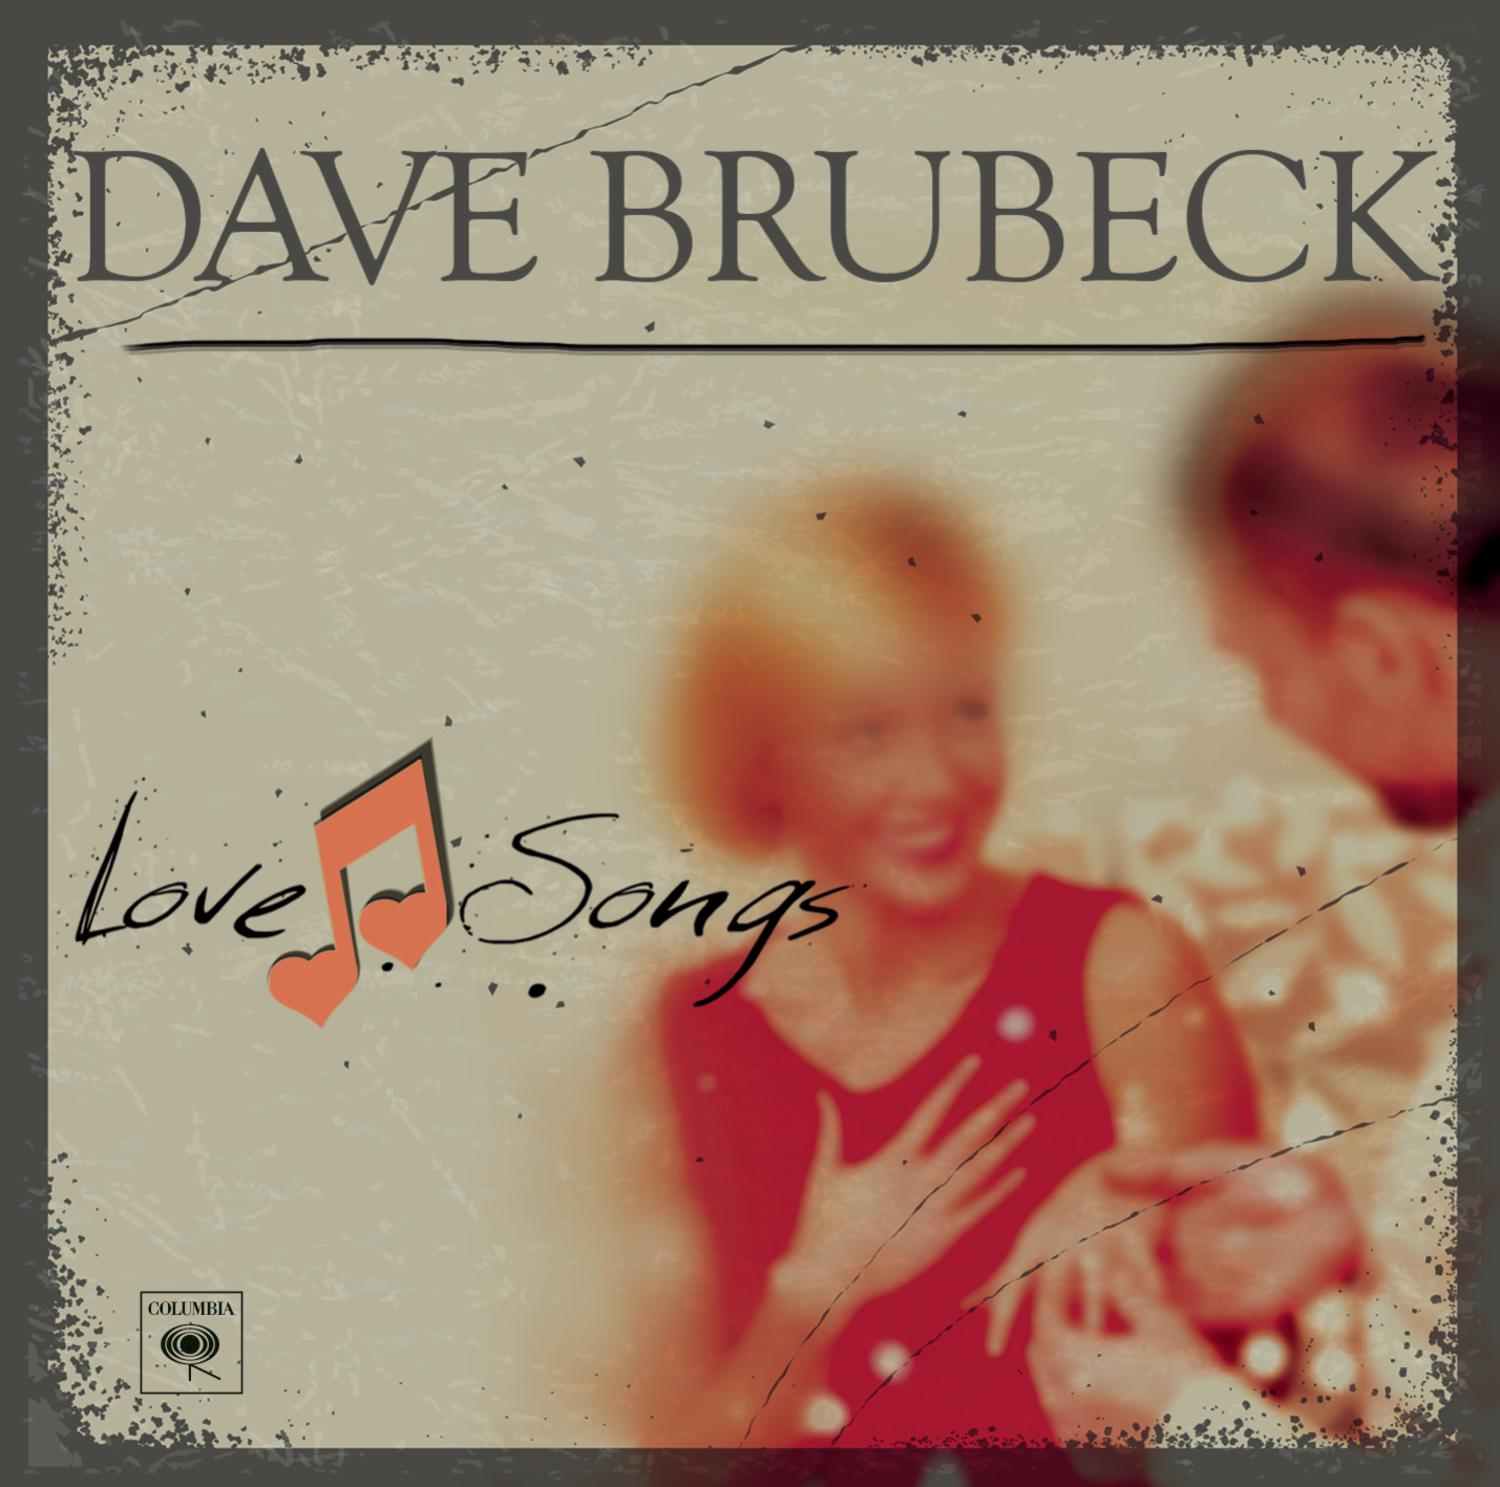 Dave Brubeck – Love Songs